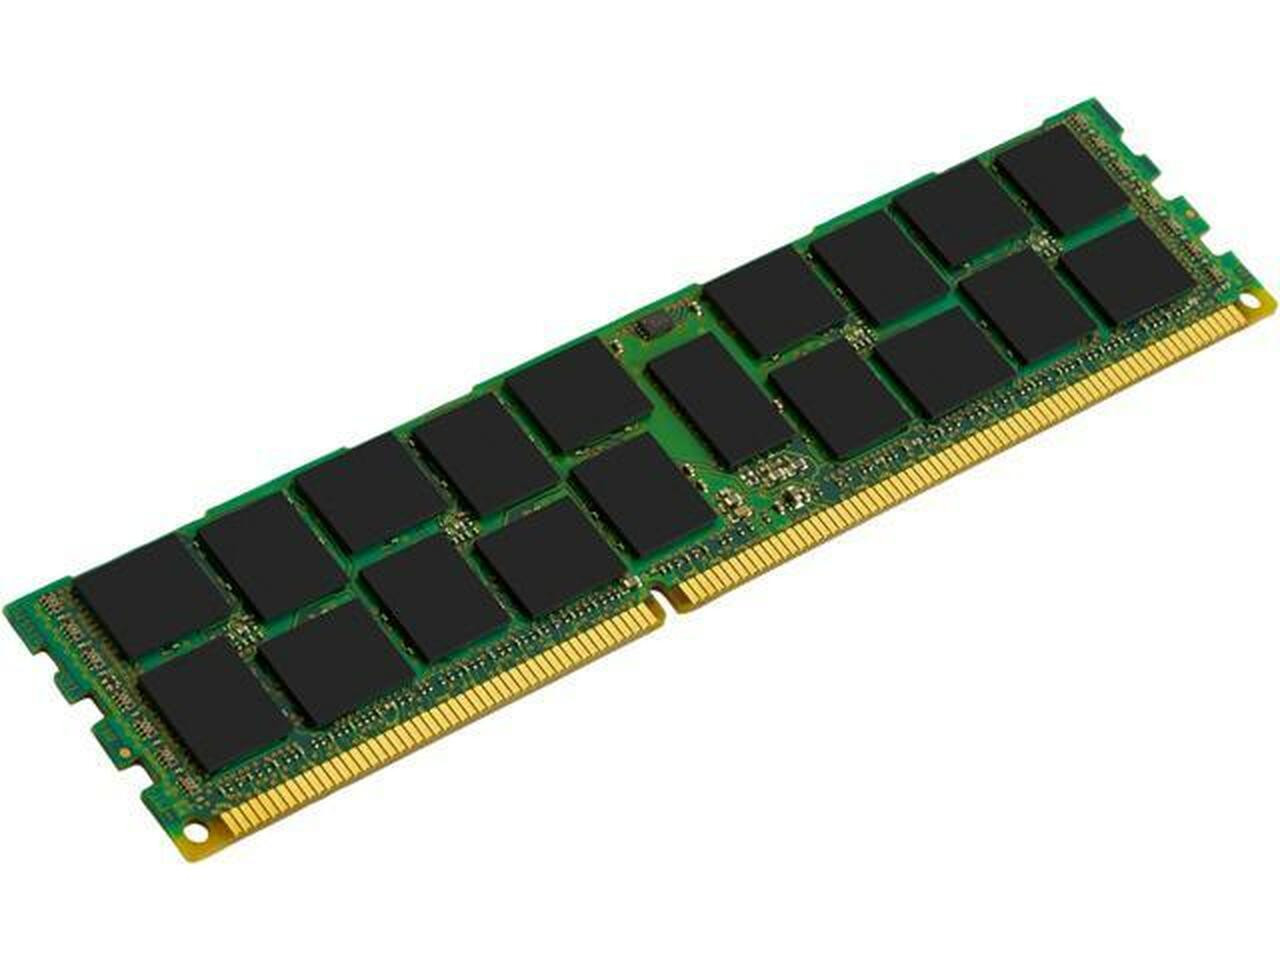 Netpatibles 64GB DDR4 SDRAM Memory Module - S26361-F4026E864-NPM